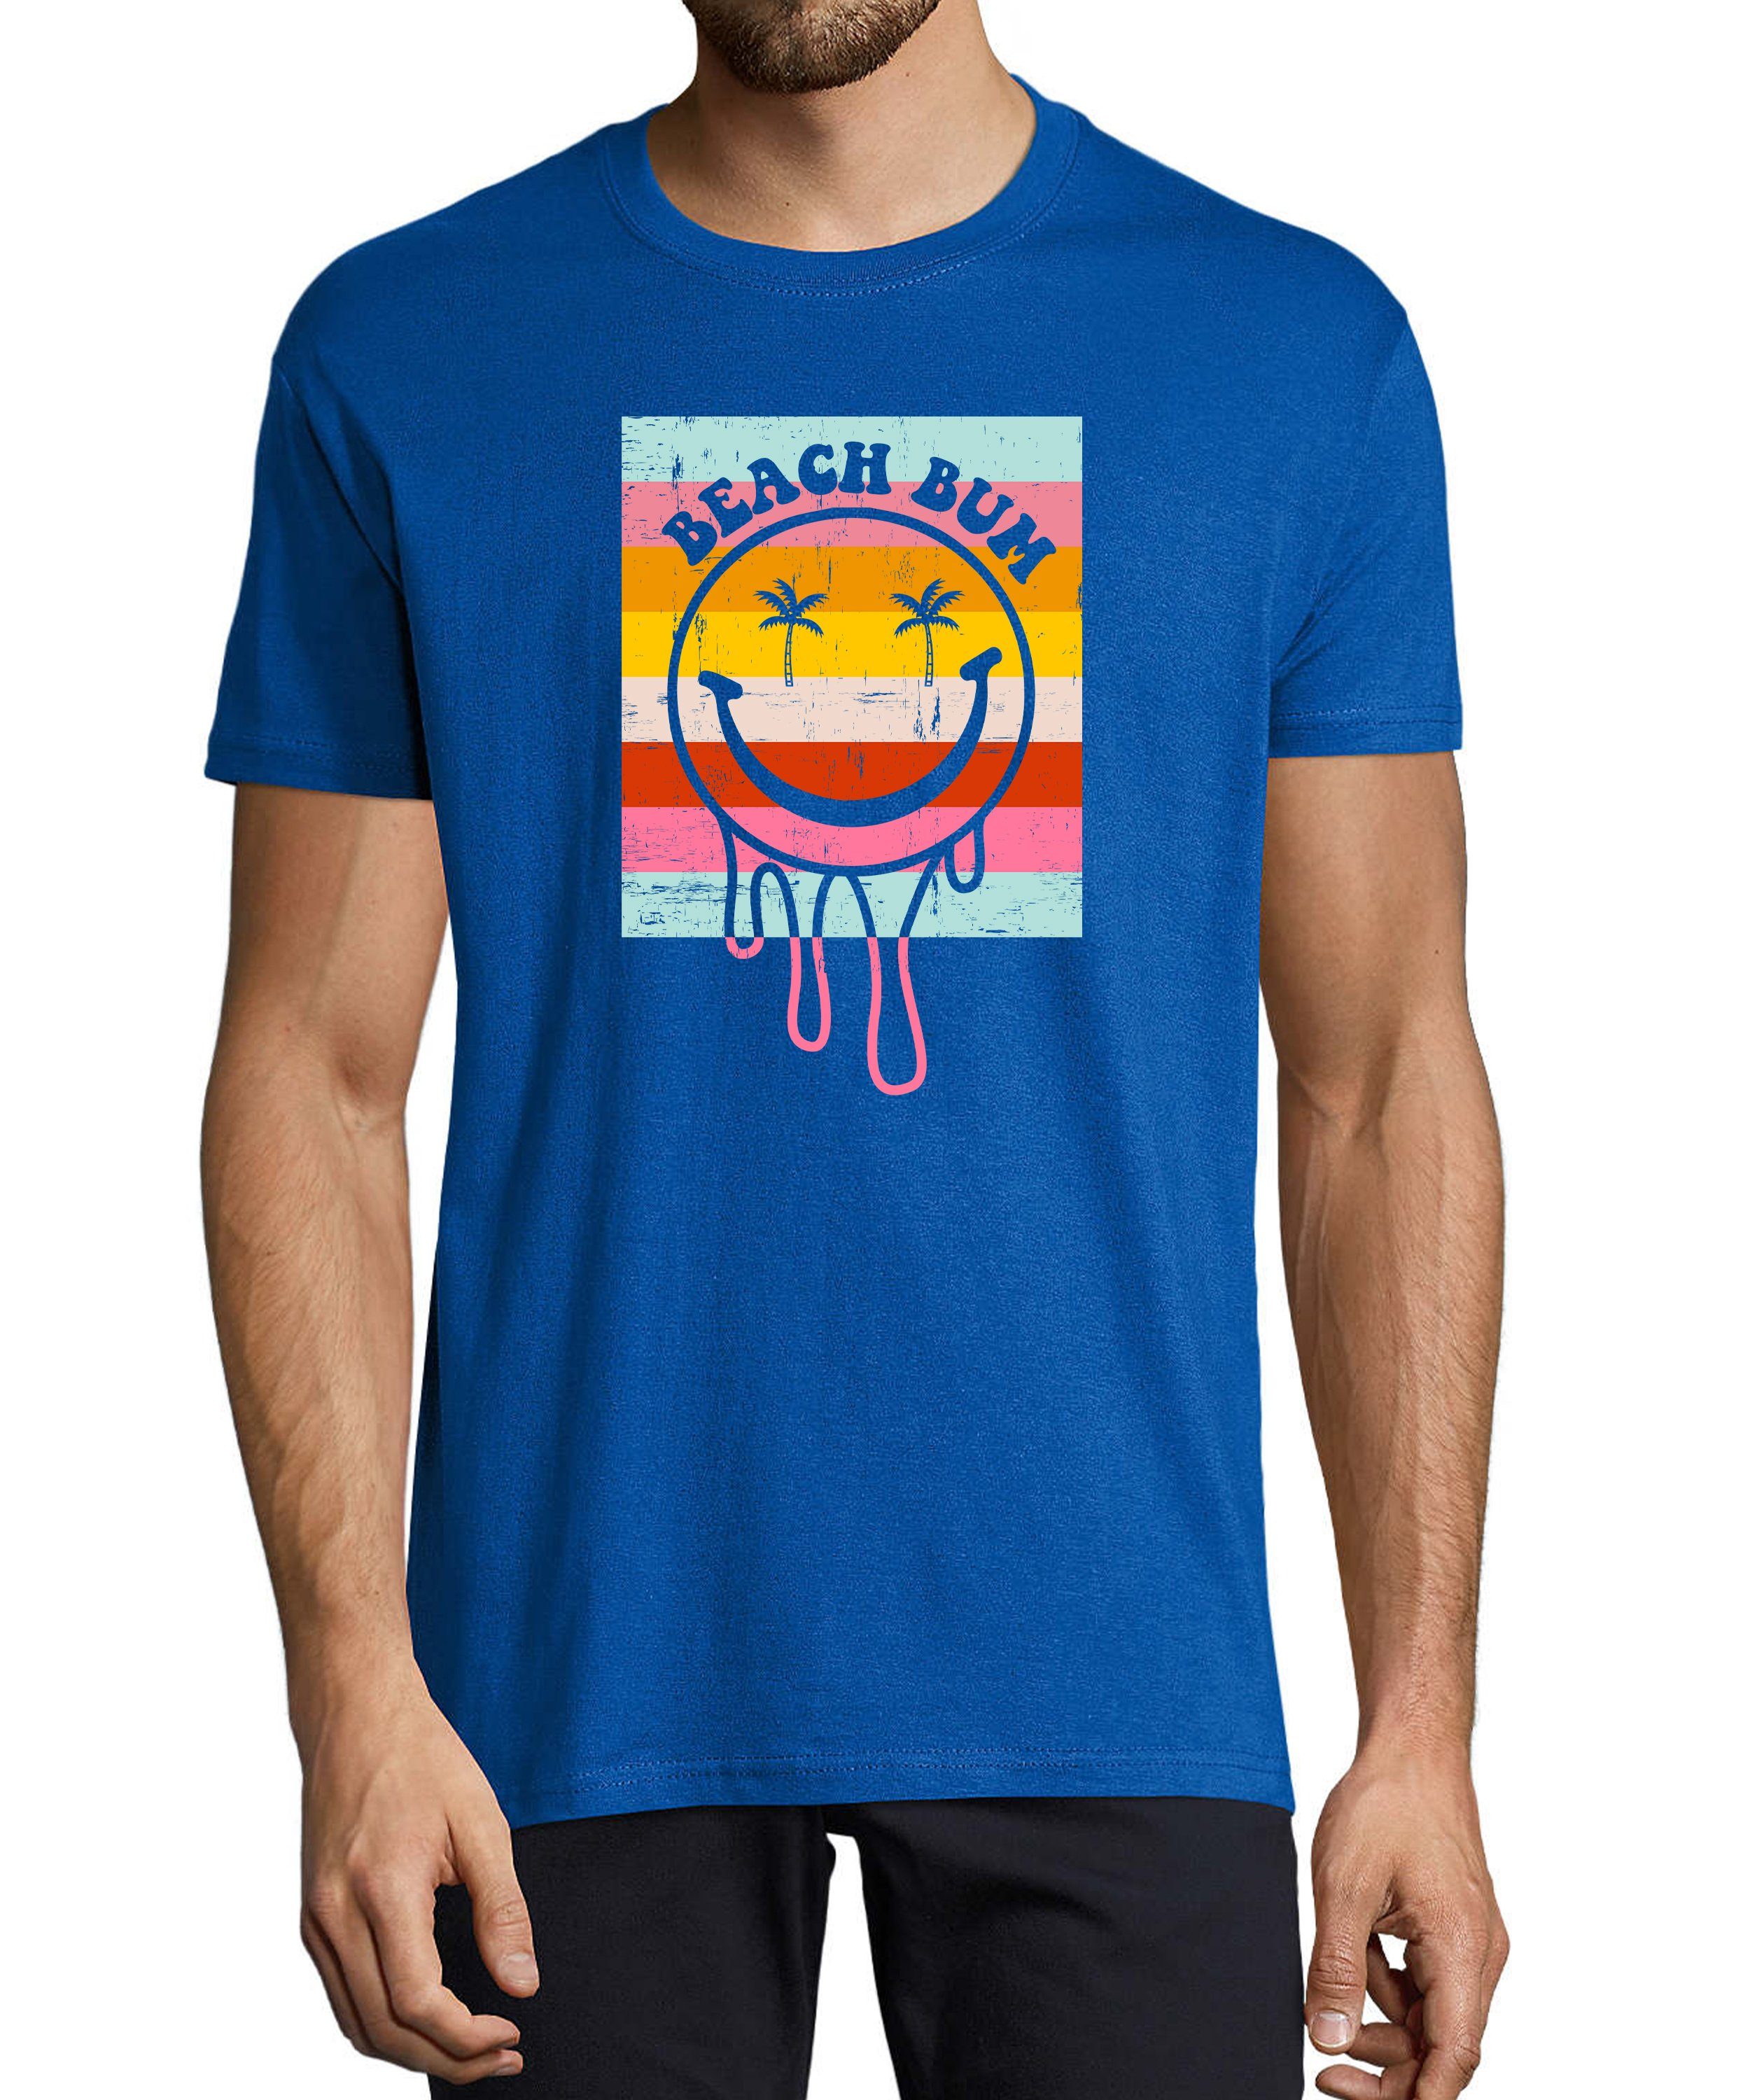 MyDesign24 T-Shirt Herren Smiley Print Shirt - Bunter Beach Bum Smiley Baumwollshirt mit Aufdruck Regular Fit, i291 royal blau | T-Shirts